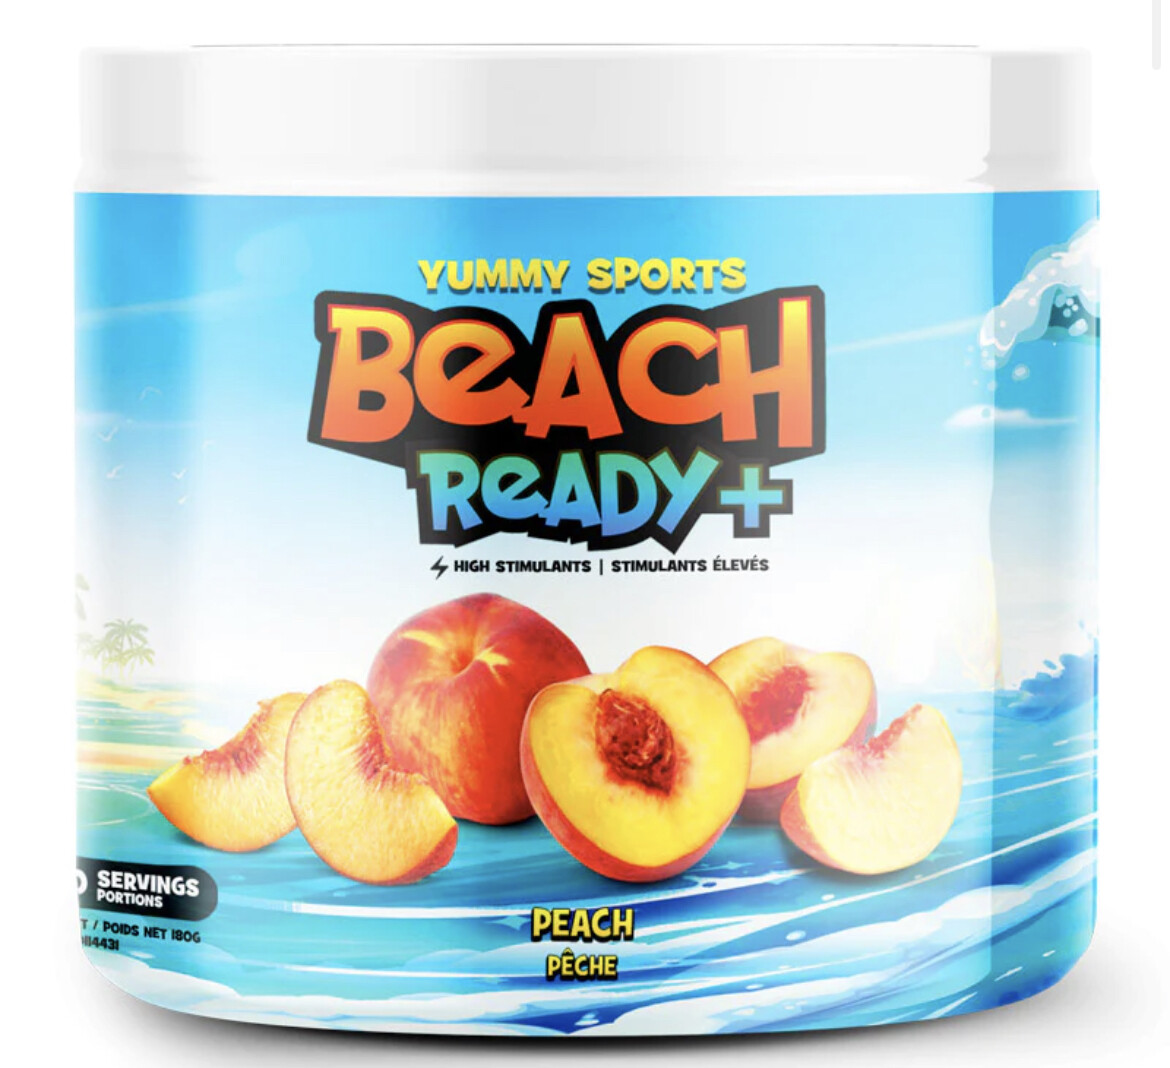 Yummy Sports Beach Ready + (brûleur de graisse à haute teneur en stimulants) PEACH 180g